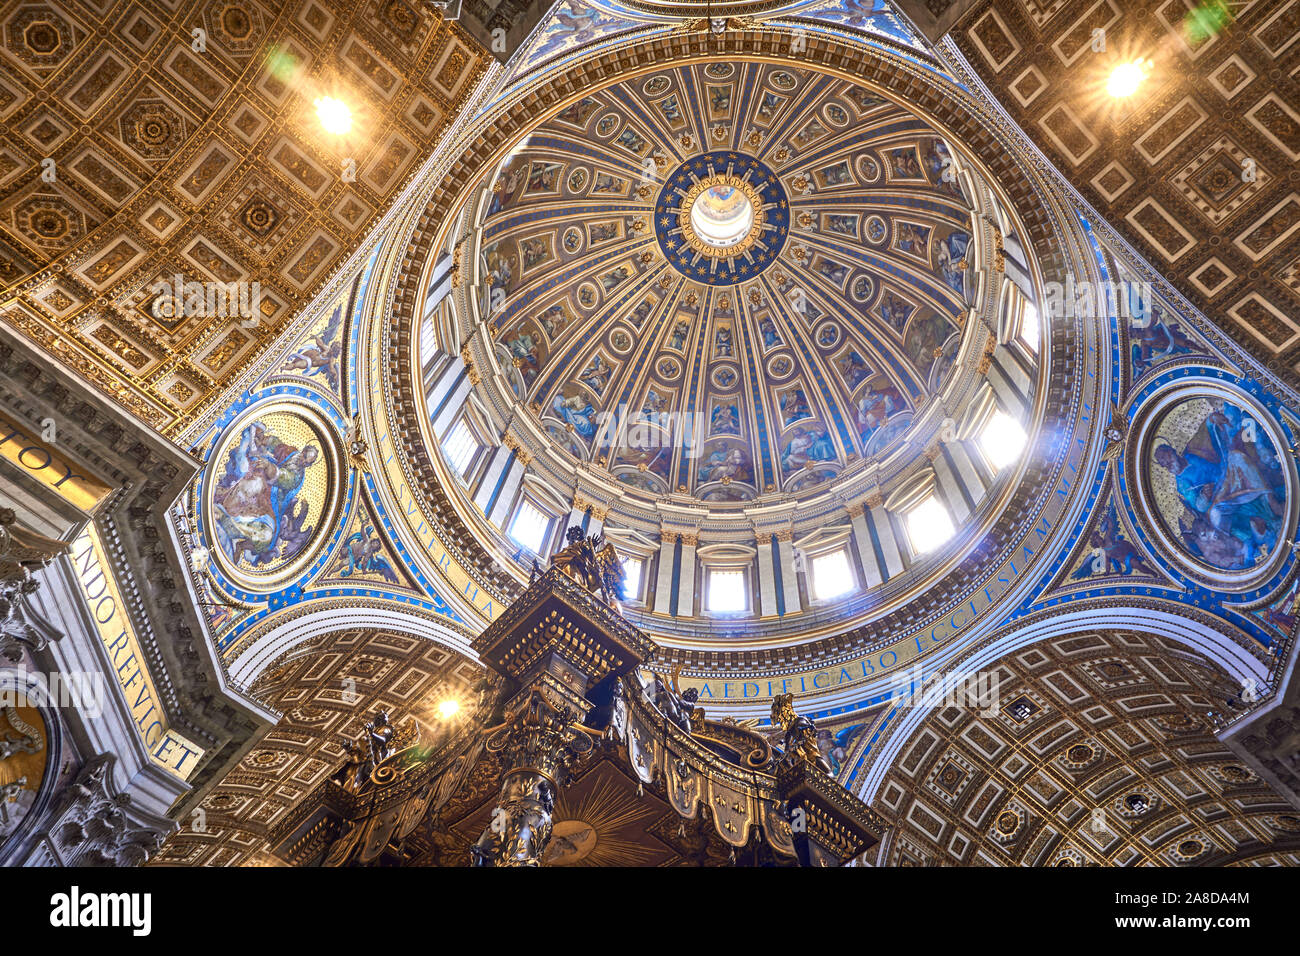 st Peter’s basilica interior Vatican City Rome Italy Stock Photo